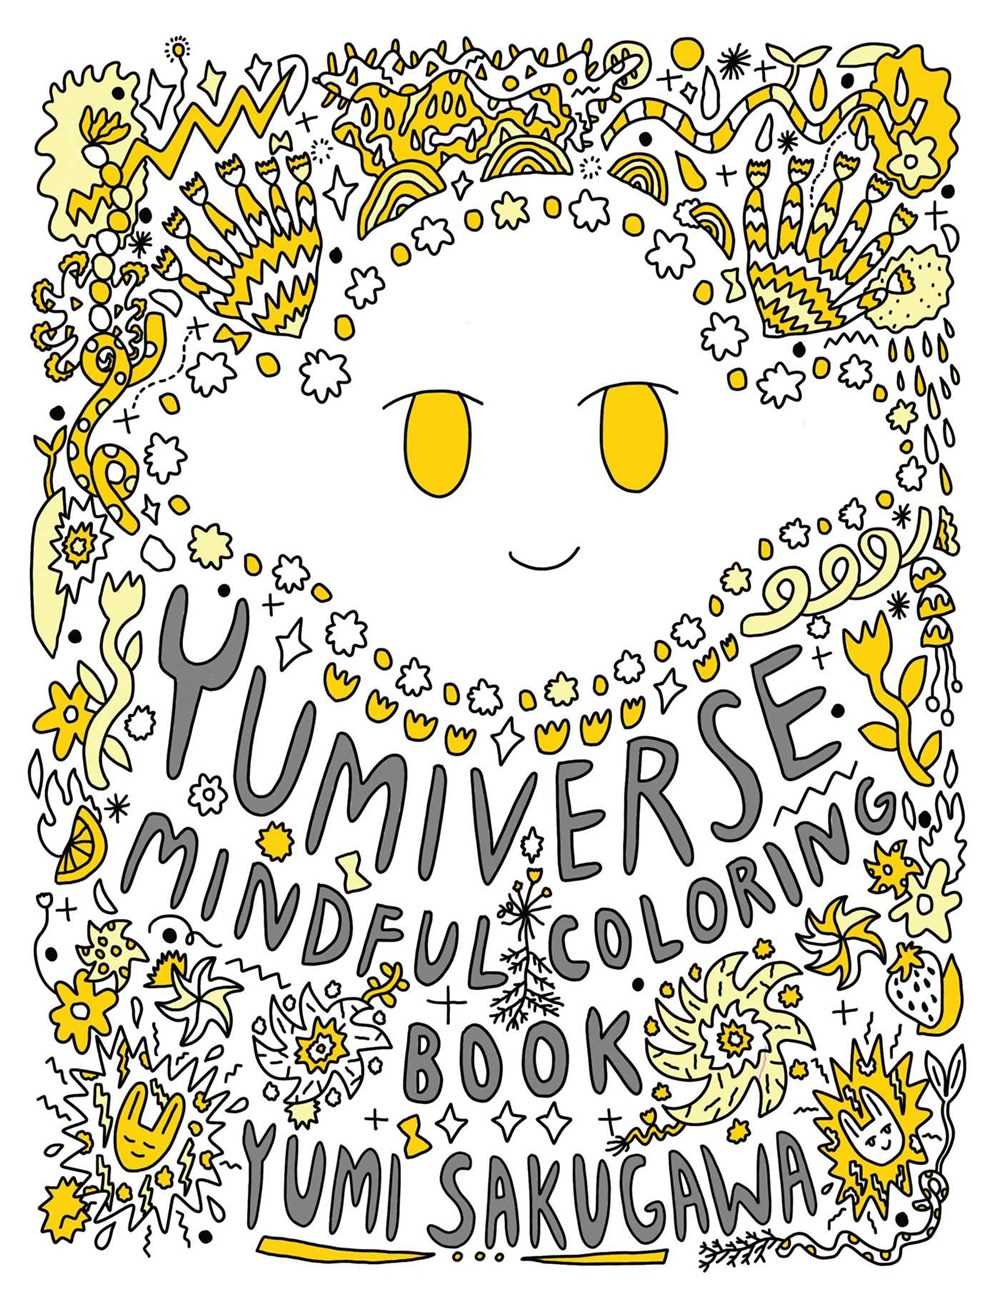 Yumiverse Coloring Book